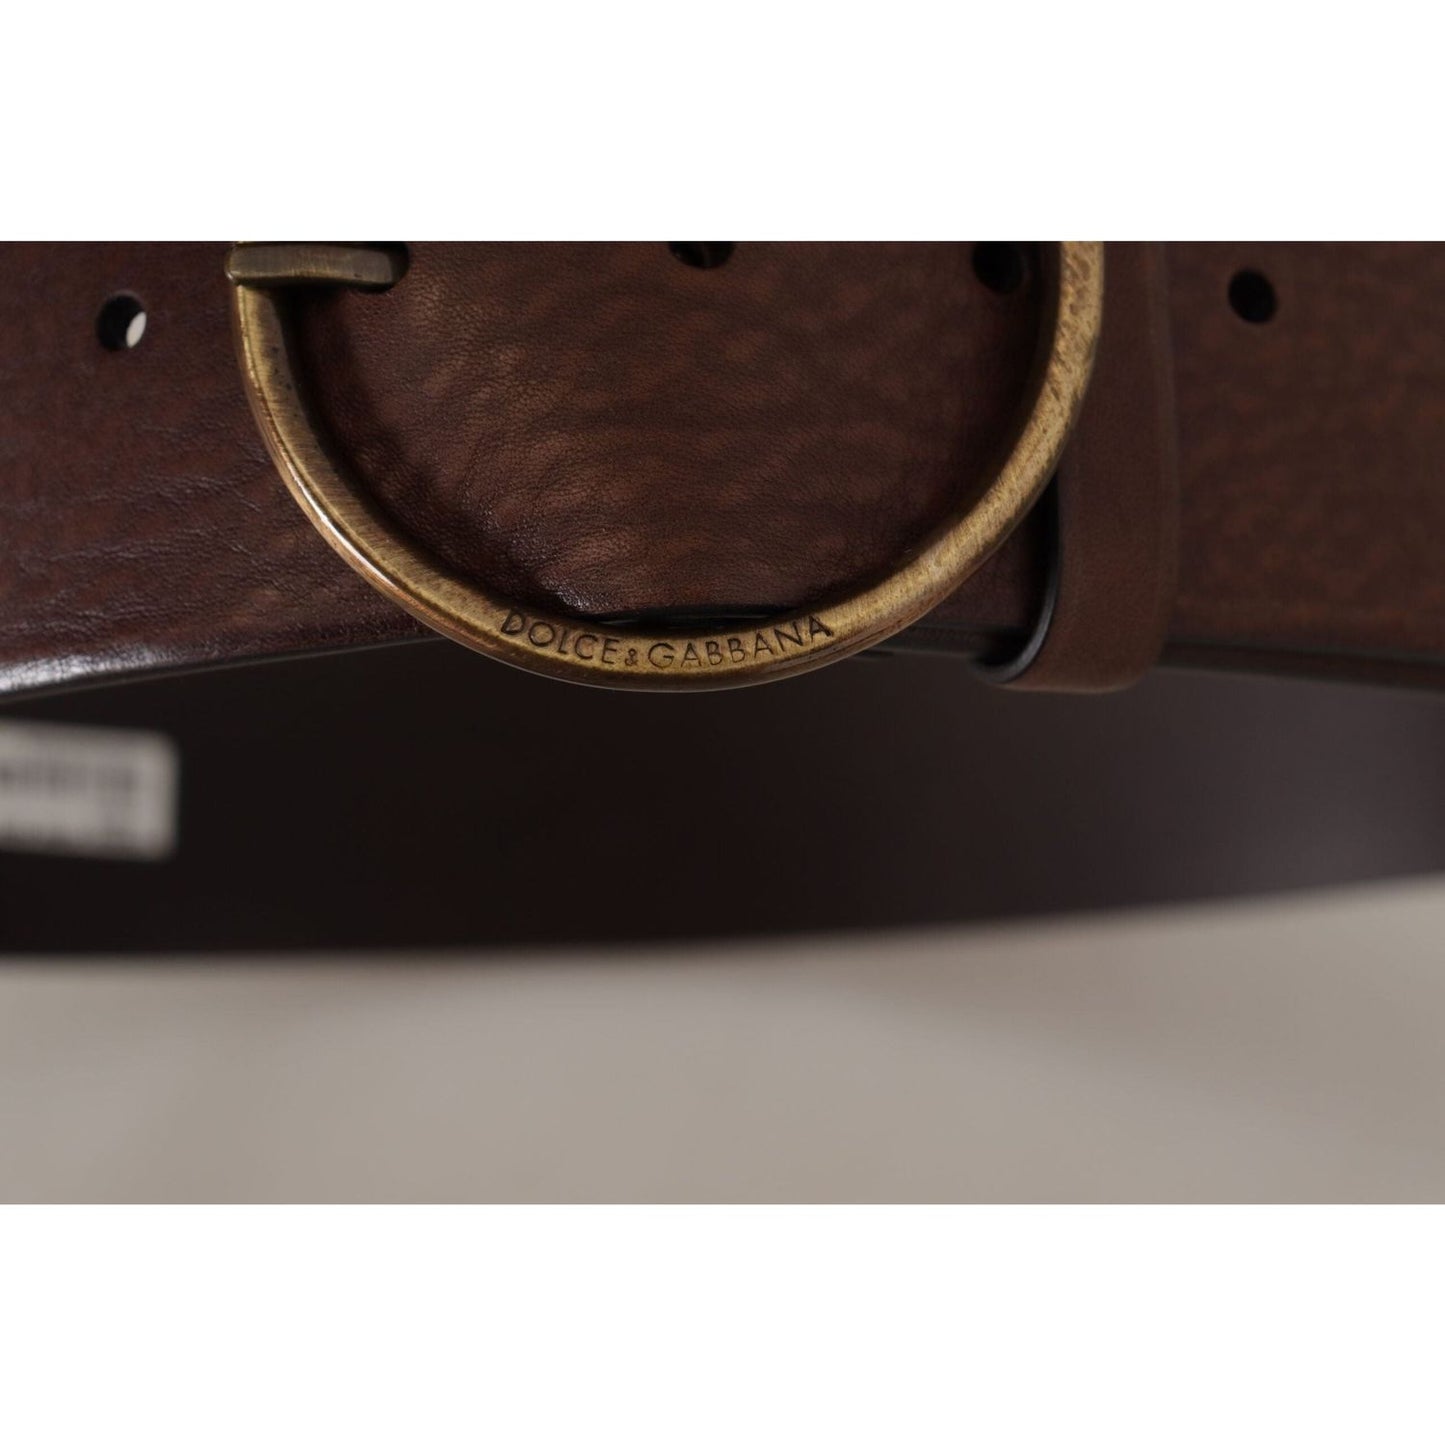 Dolce & Gabbana Elegant Brown Leather Belt with Engraved Buckle brown-leather-wide-waist-logo-metal-round-buckle-belt